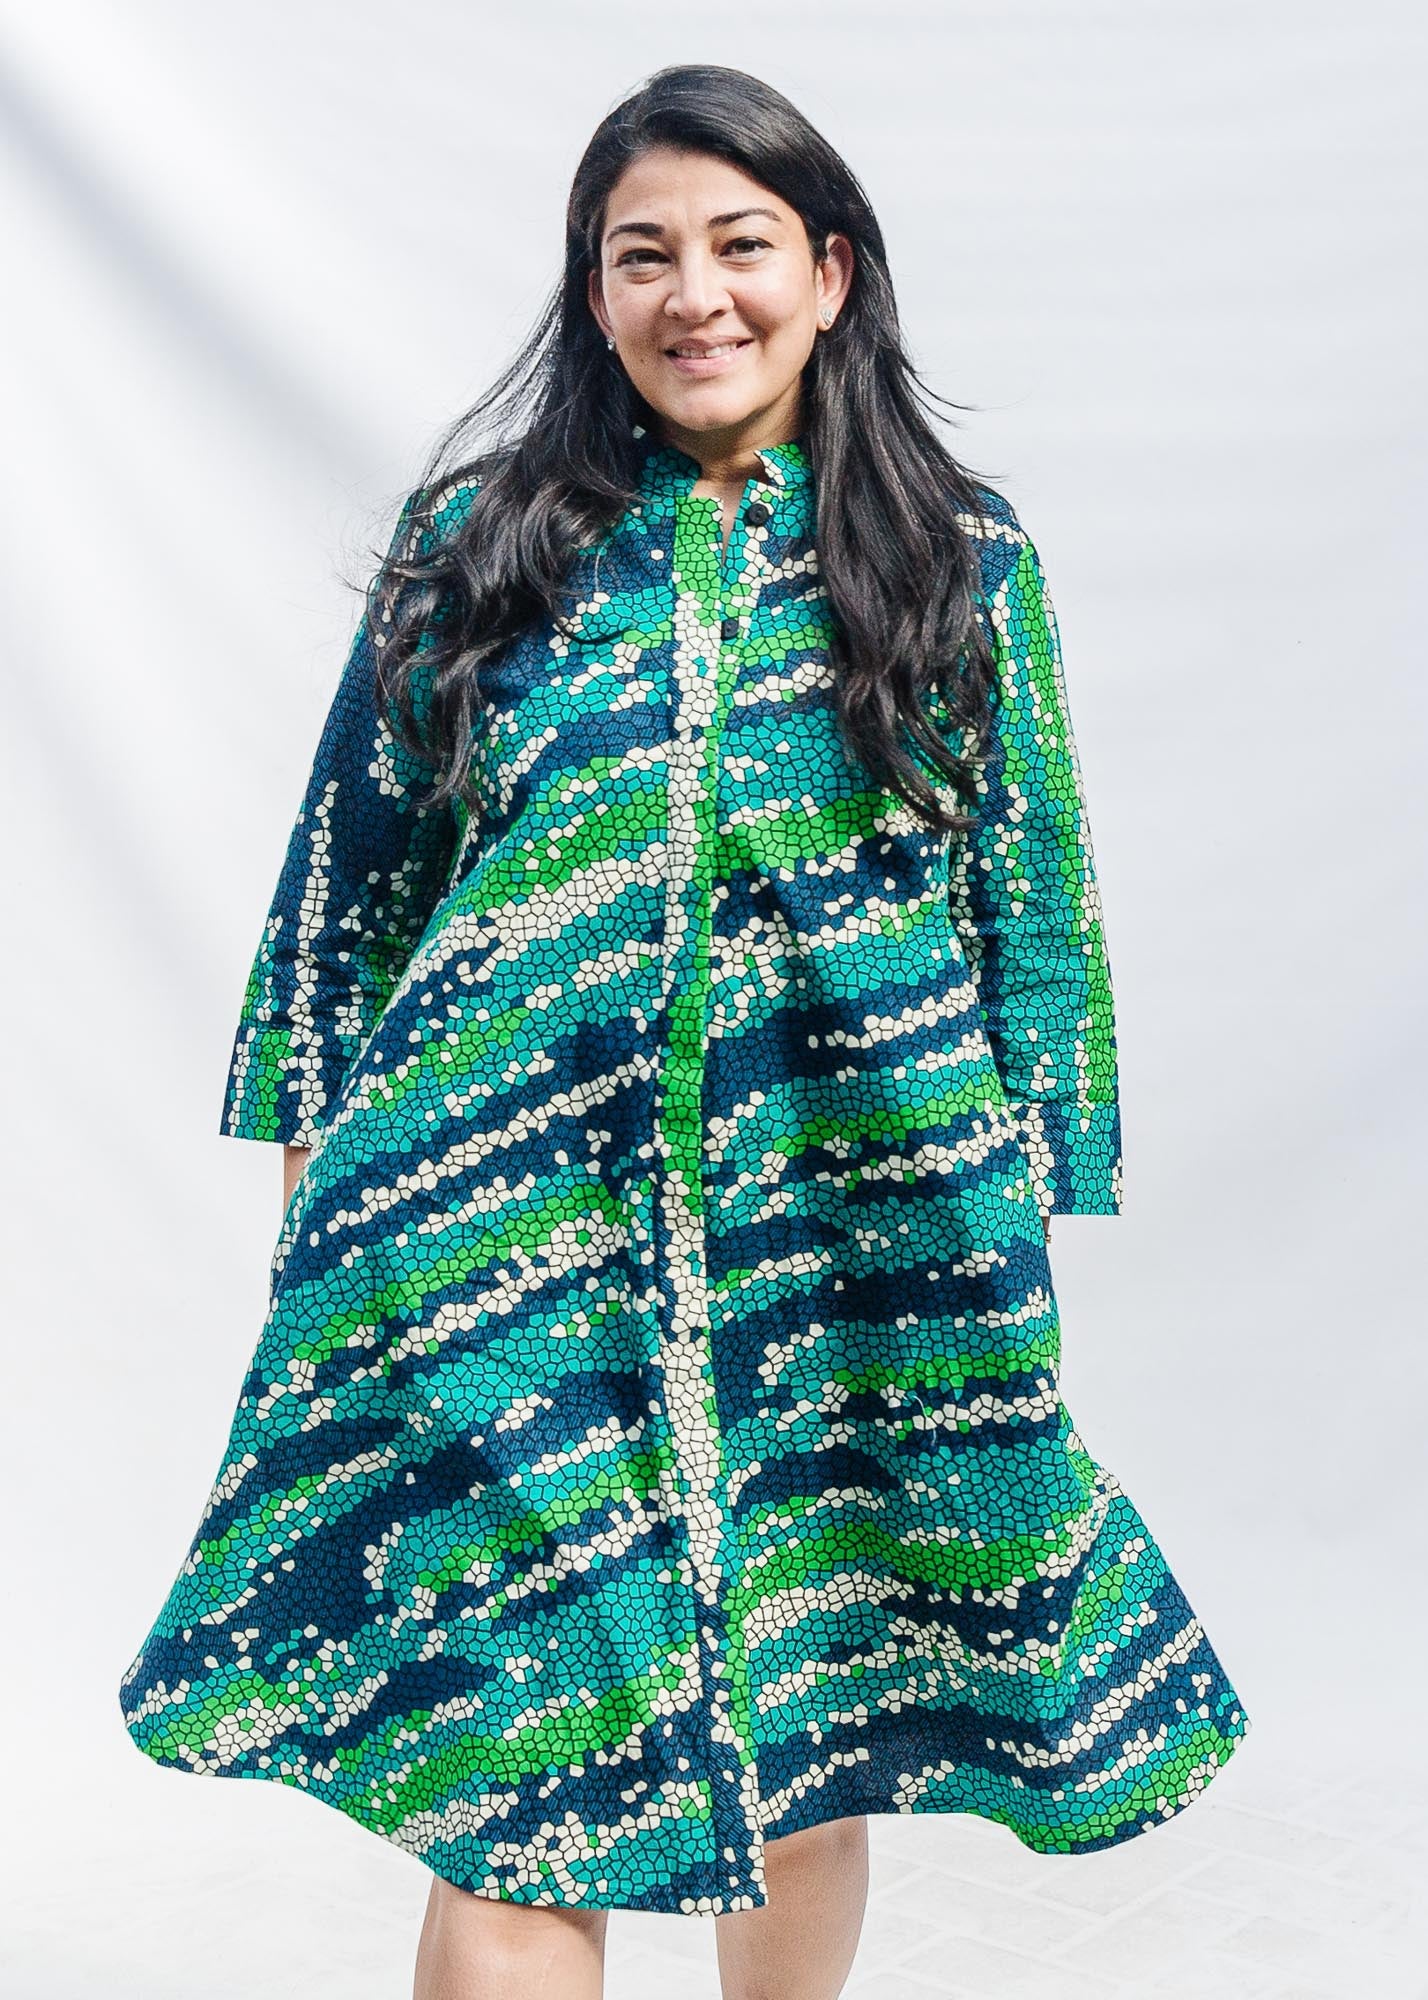 The model is wearing black, green, white, blue and aqua print dress